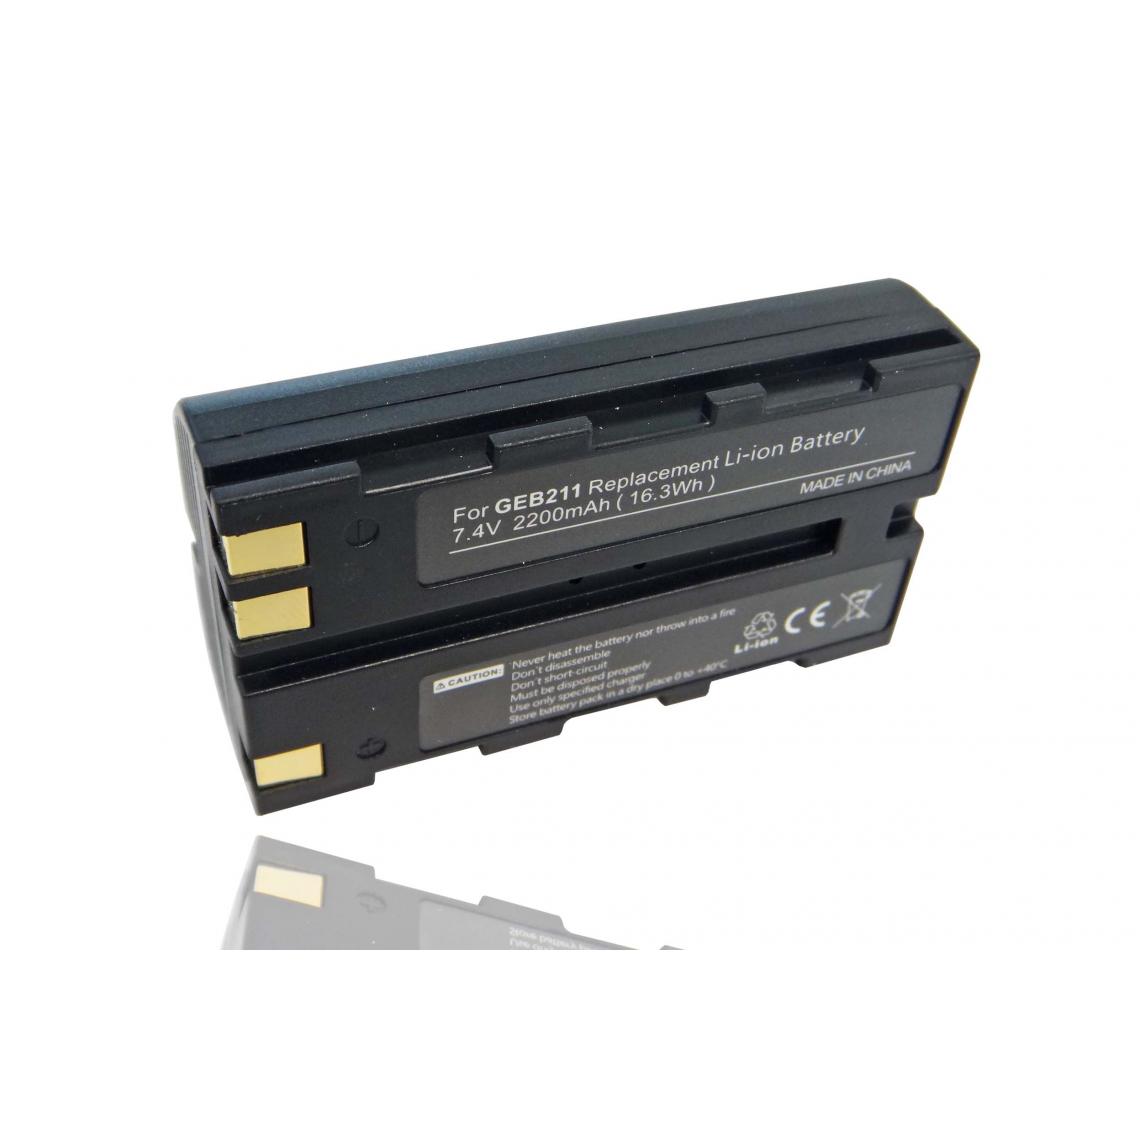 Vhbw - vhbw Batterie compatible avec Leica TPS1100, TPS1200, TPS300 dispositif de mesure laser, outil de mesure (2200mAh, 7,4V, Li-ion) - Piles rechargeables